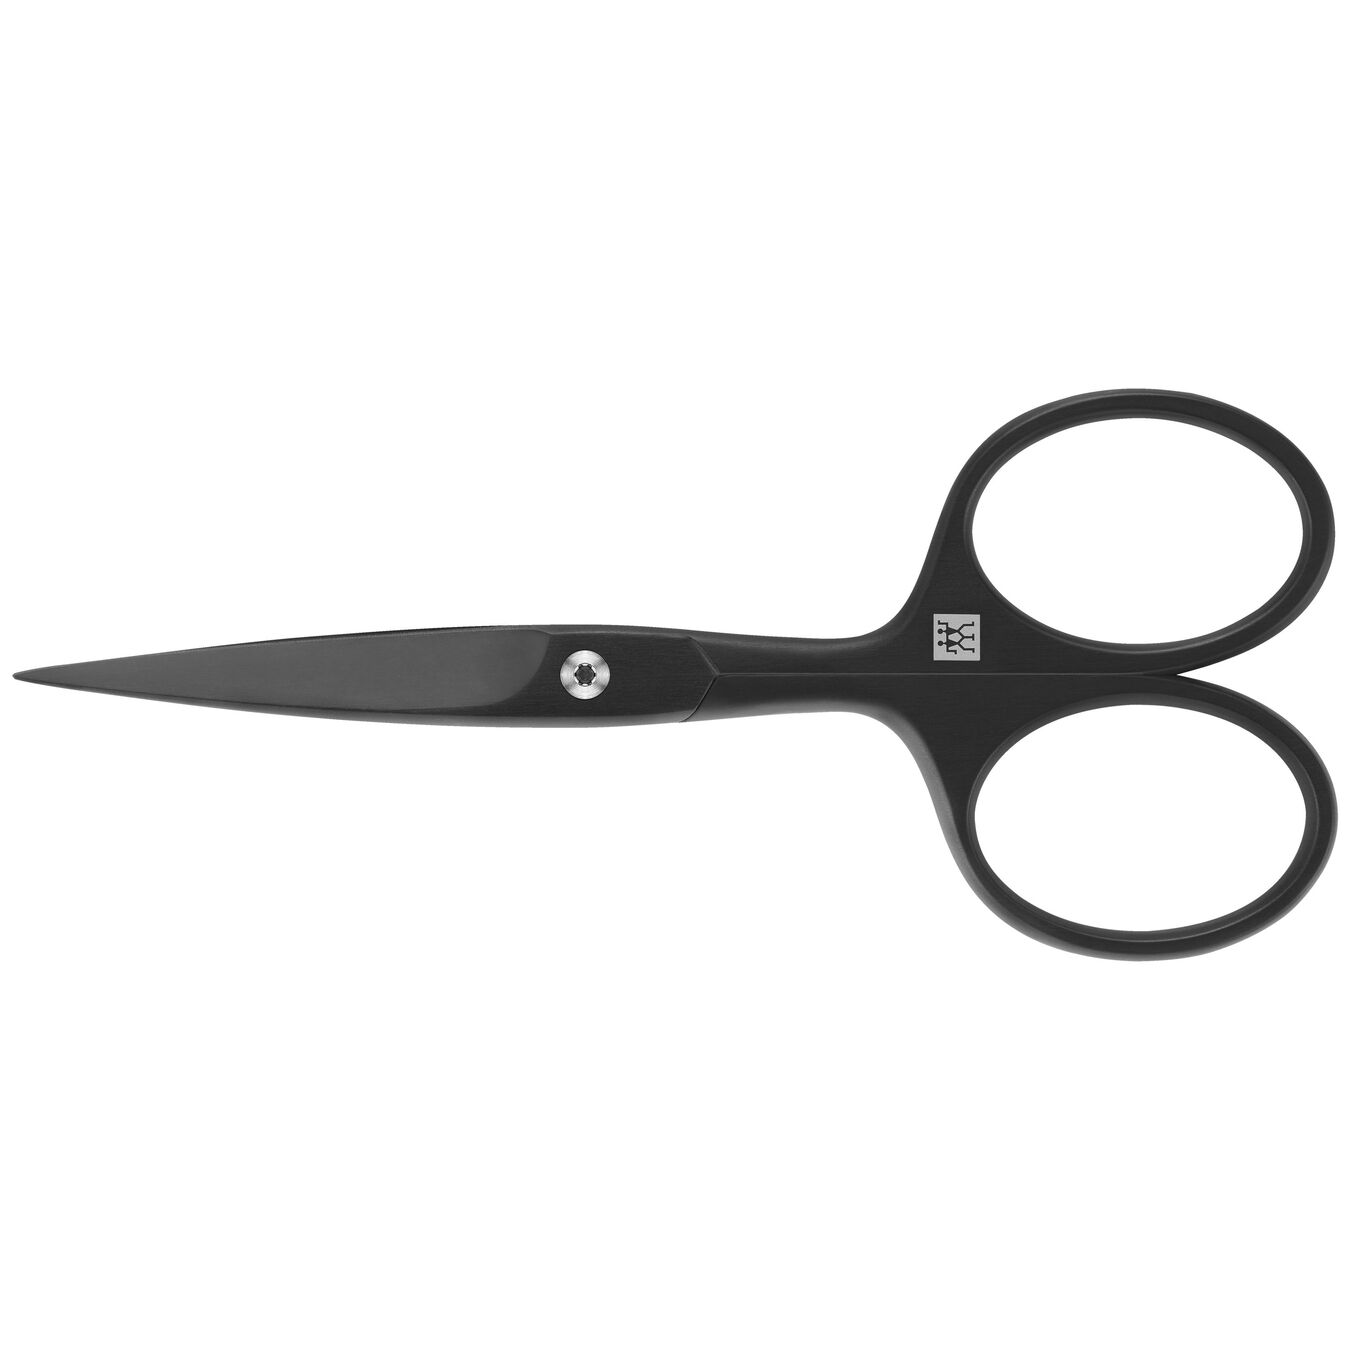 Beard scissors, Stainless steel | Diamond-like Carbon | black,,large 1